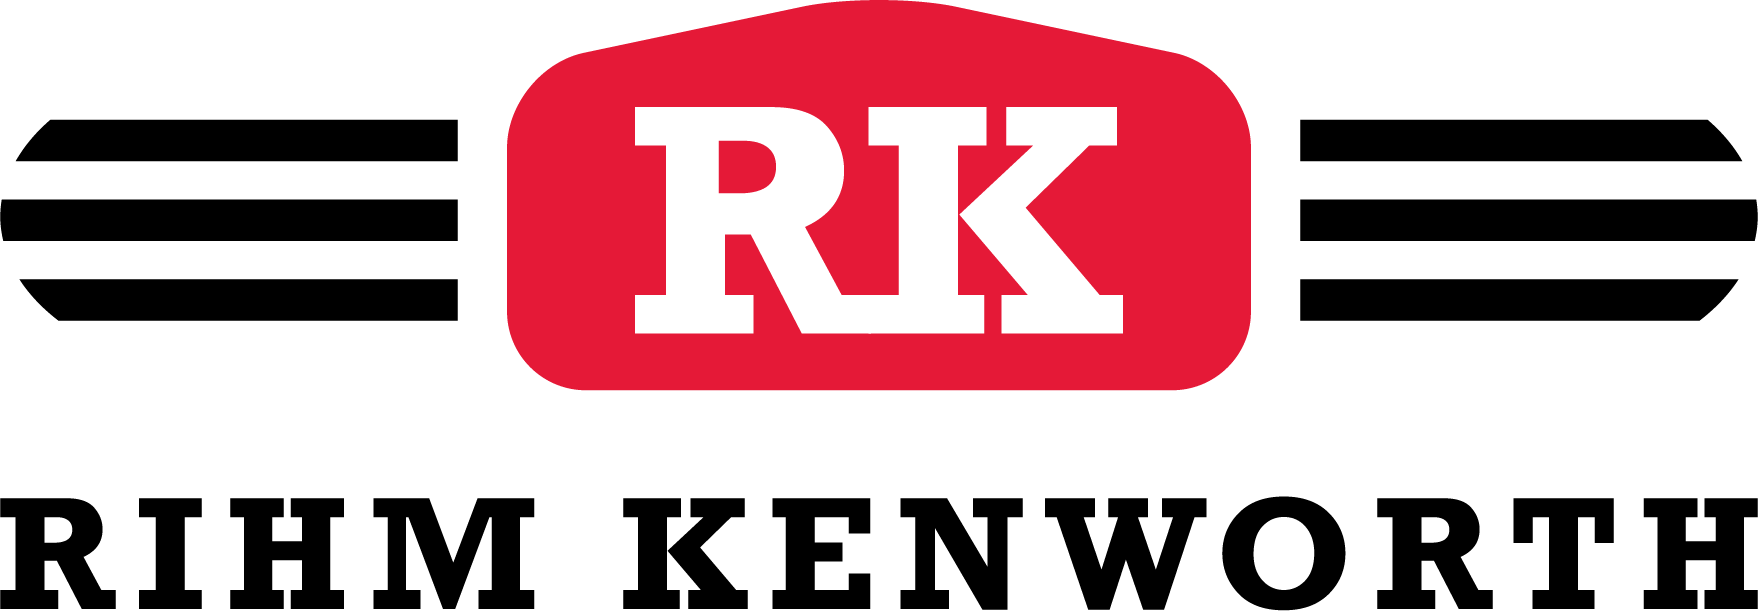 Rihm-Kenworth-transparent-logo